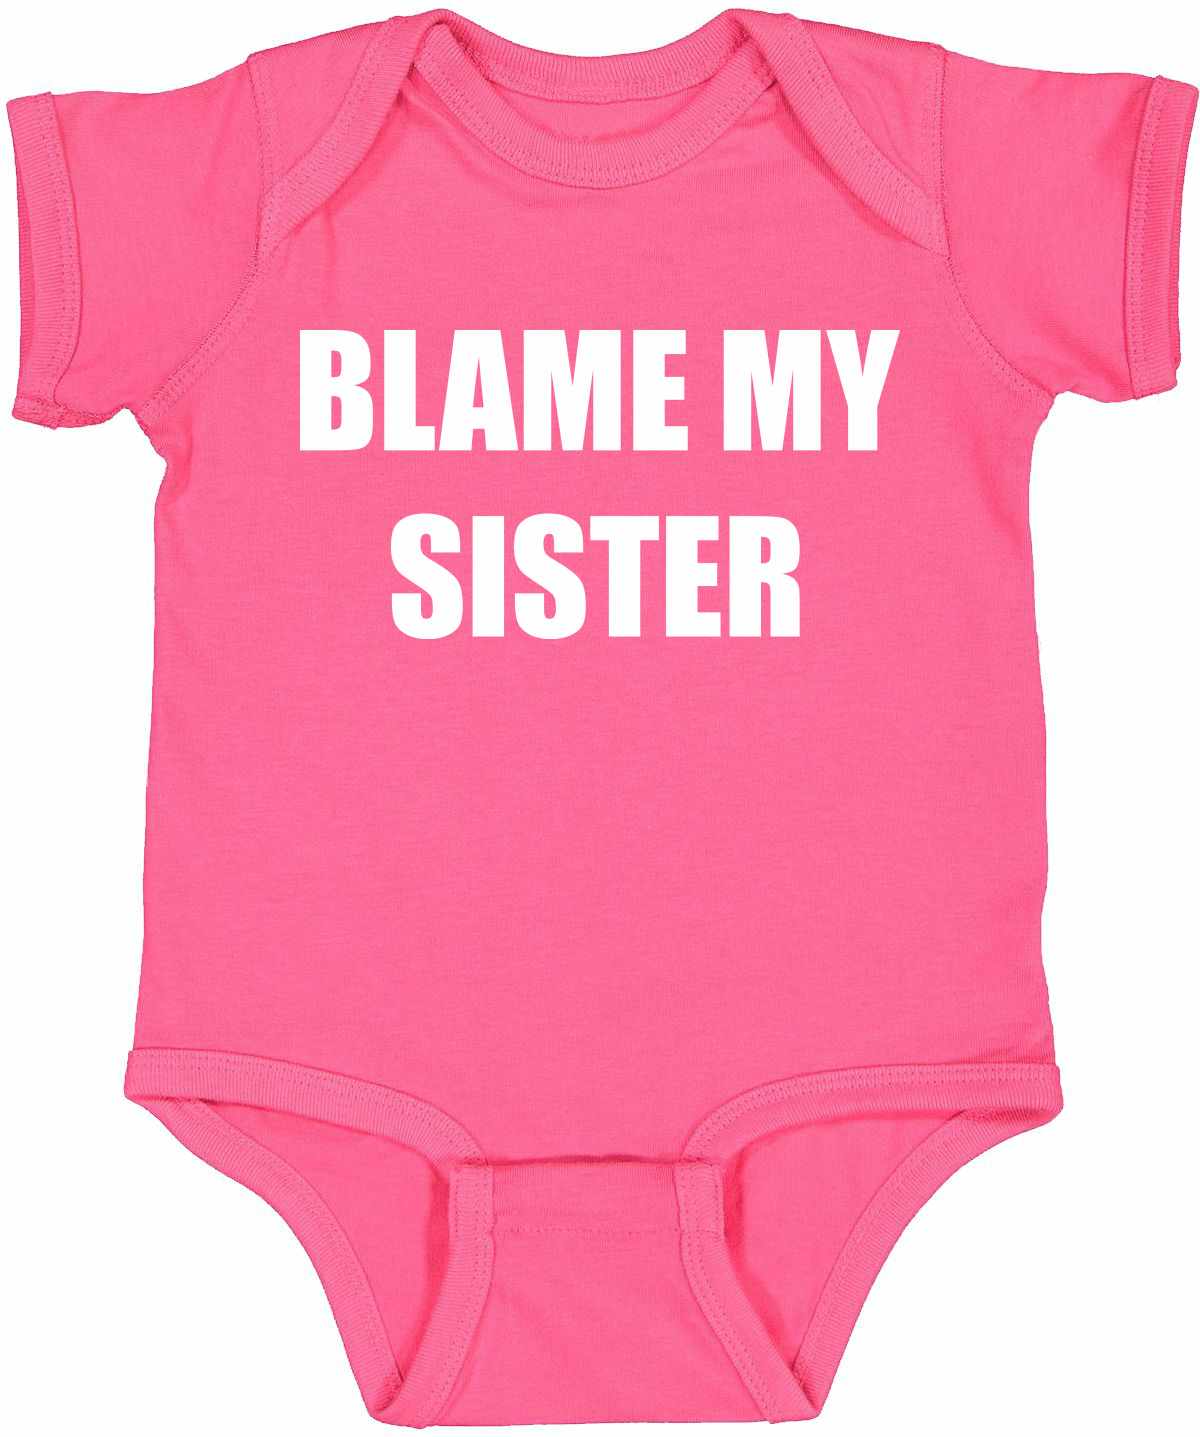 Blame My Sister on Infant BodySuit (#754-10)